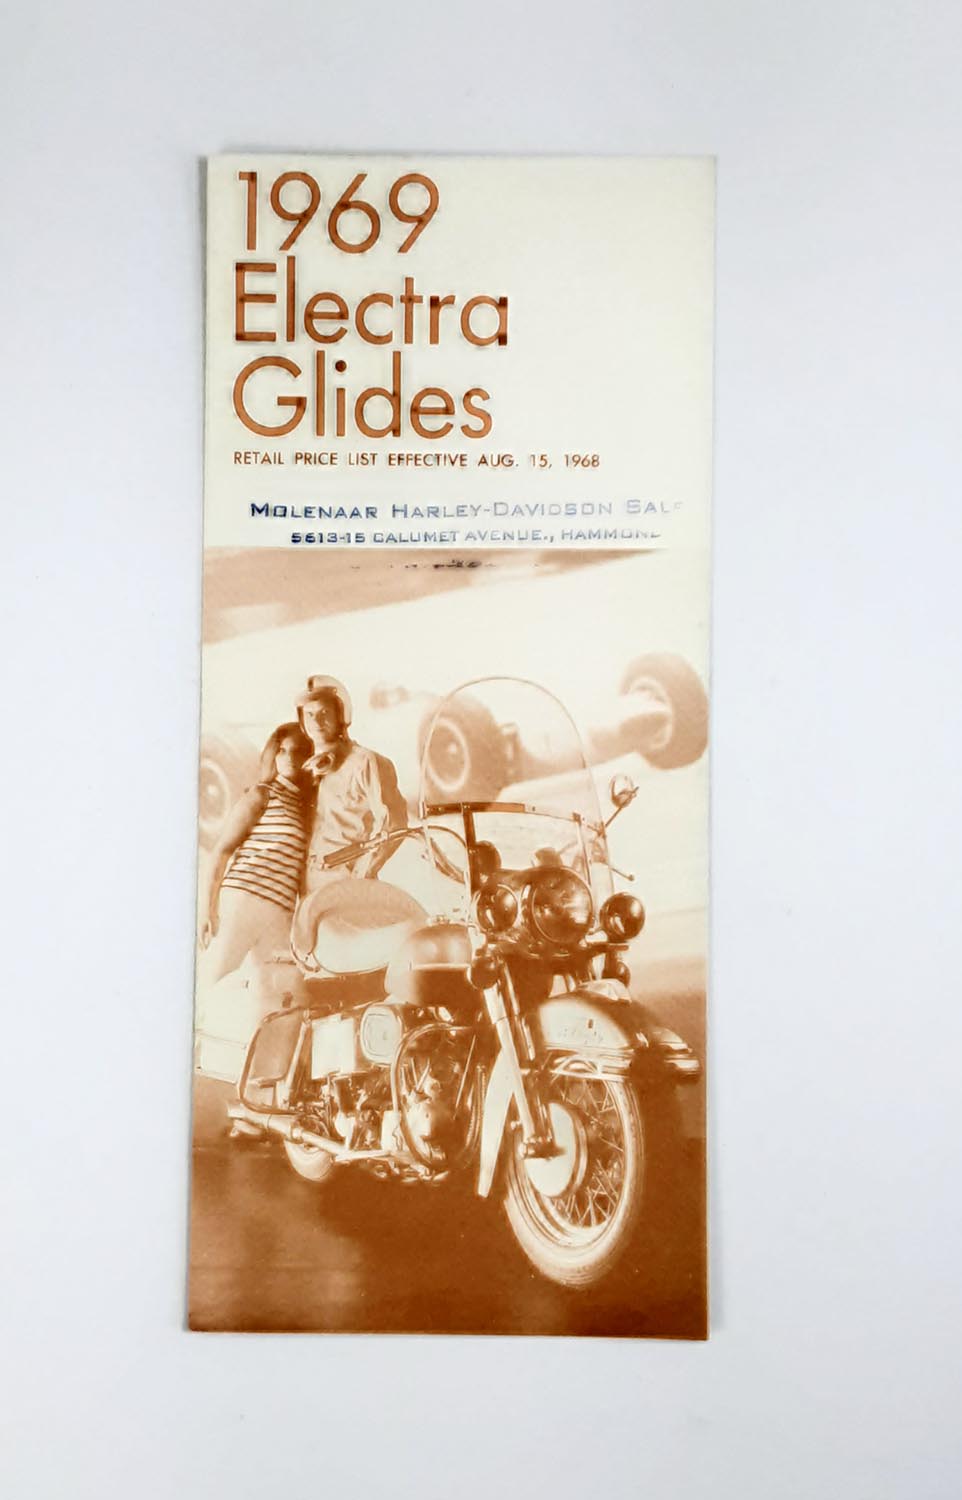 Vintage 1969 Harley Electra Glides Retail Price List